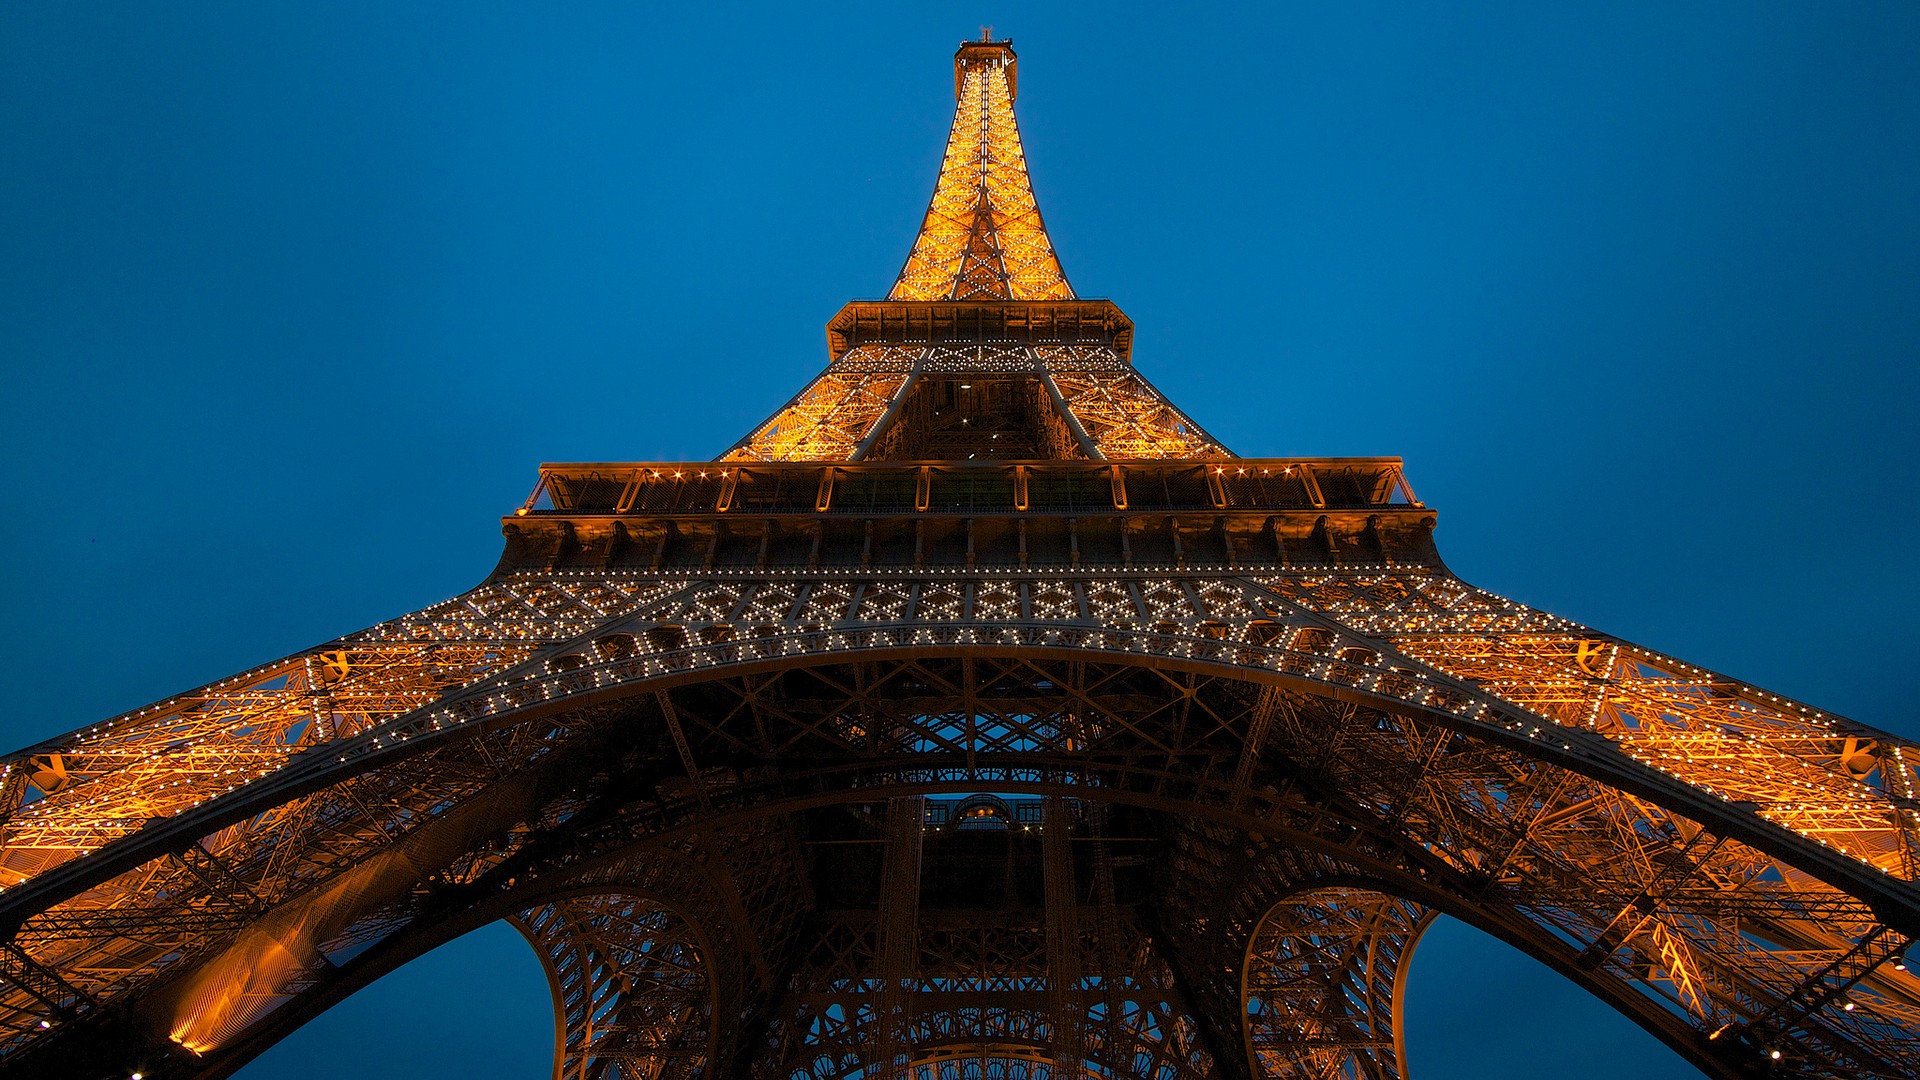 General 1920x1080 city France Paris Eiffel Tower architecture worm's eye view landmark Europe